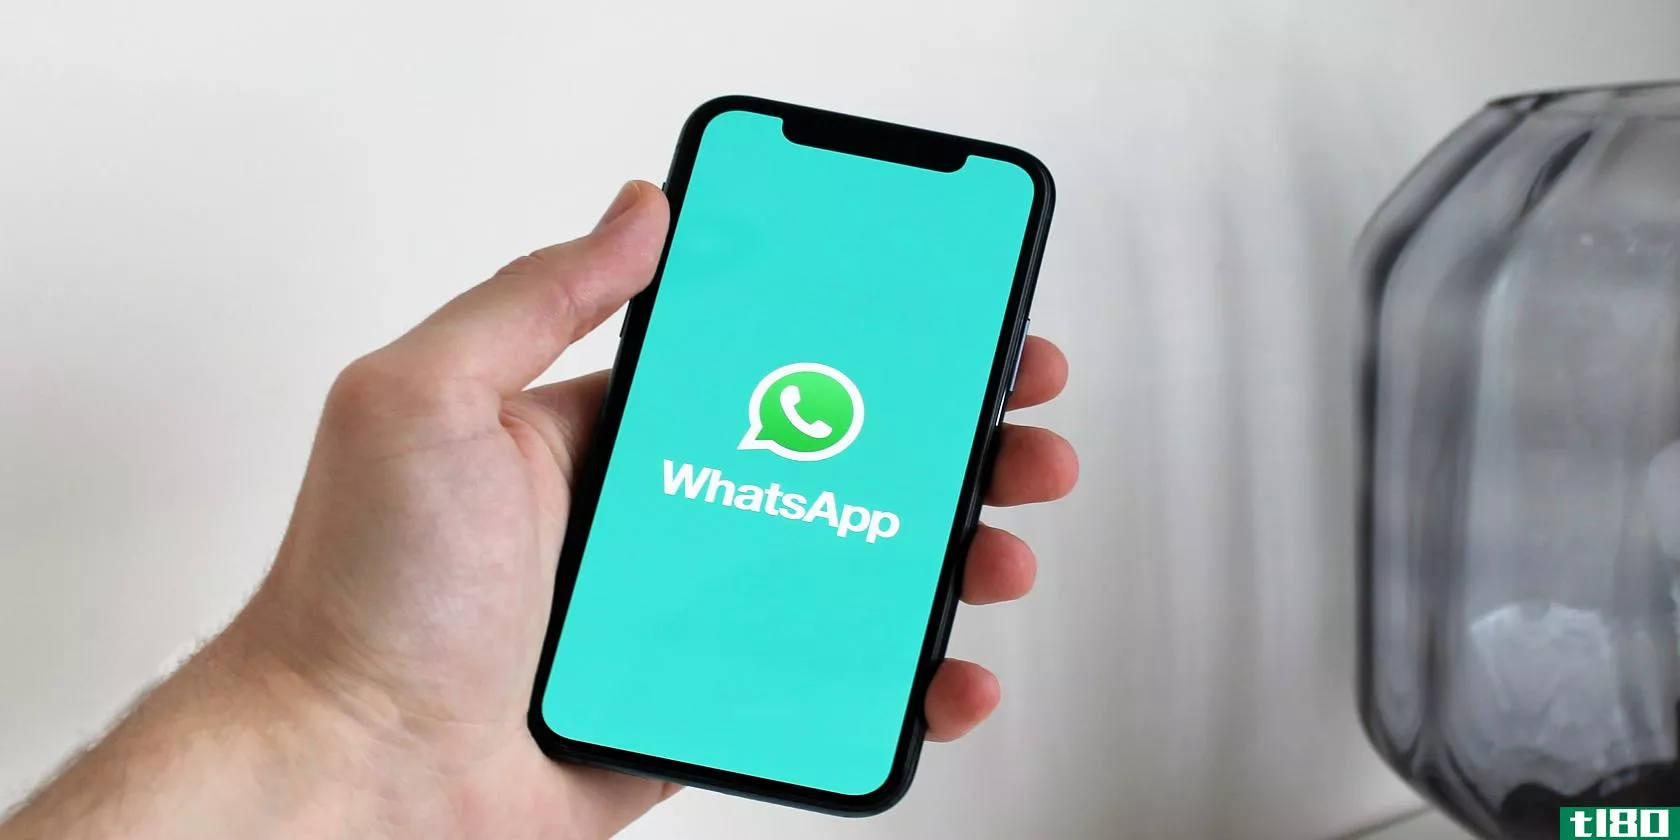 Phone screen showing WhatsApp